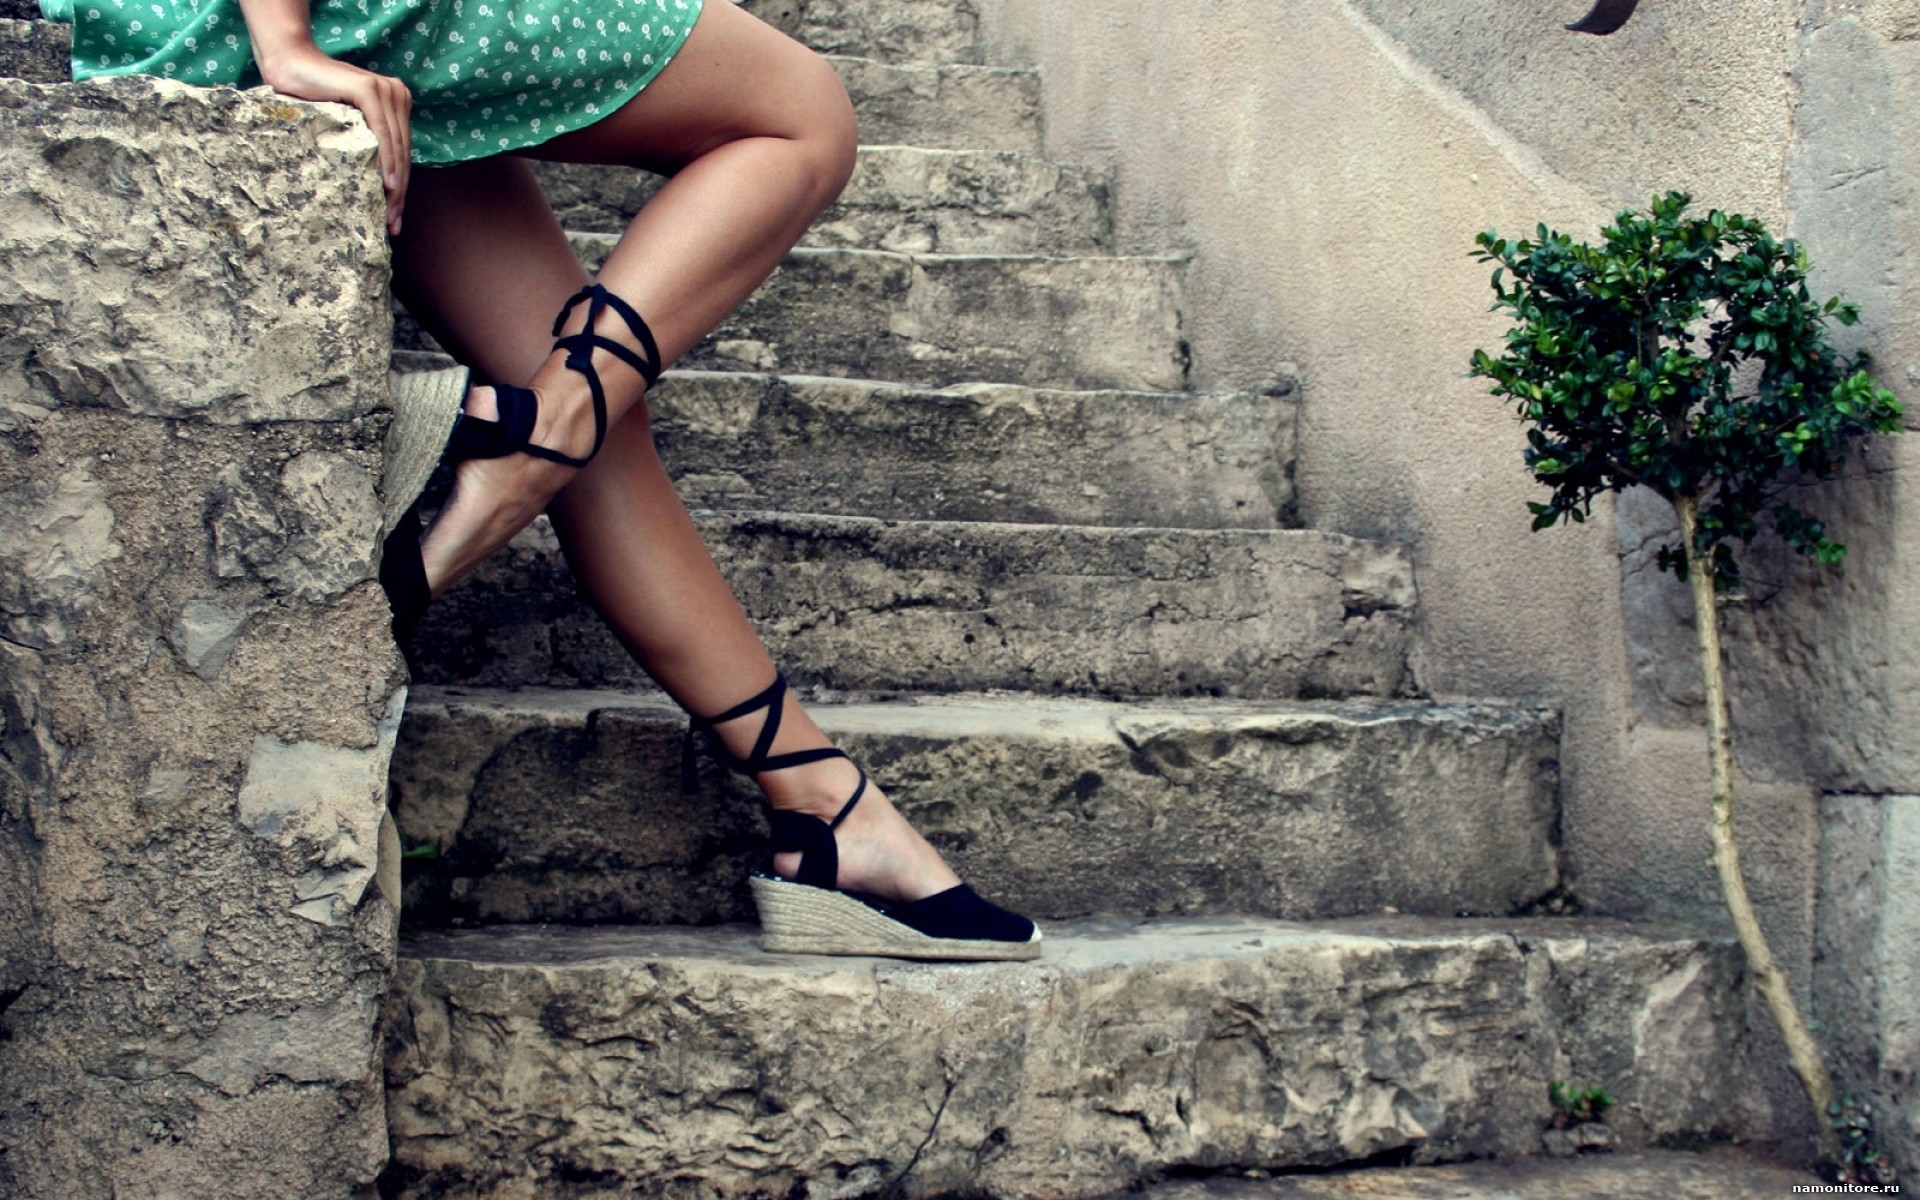 Фото зрелой девушки раздвигающей ноги на лестнице